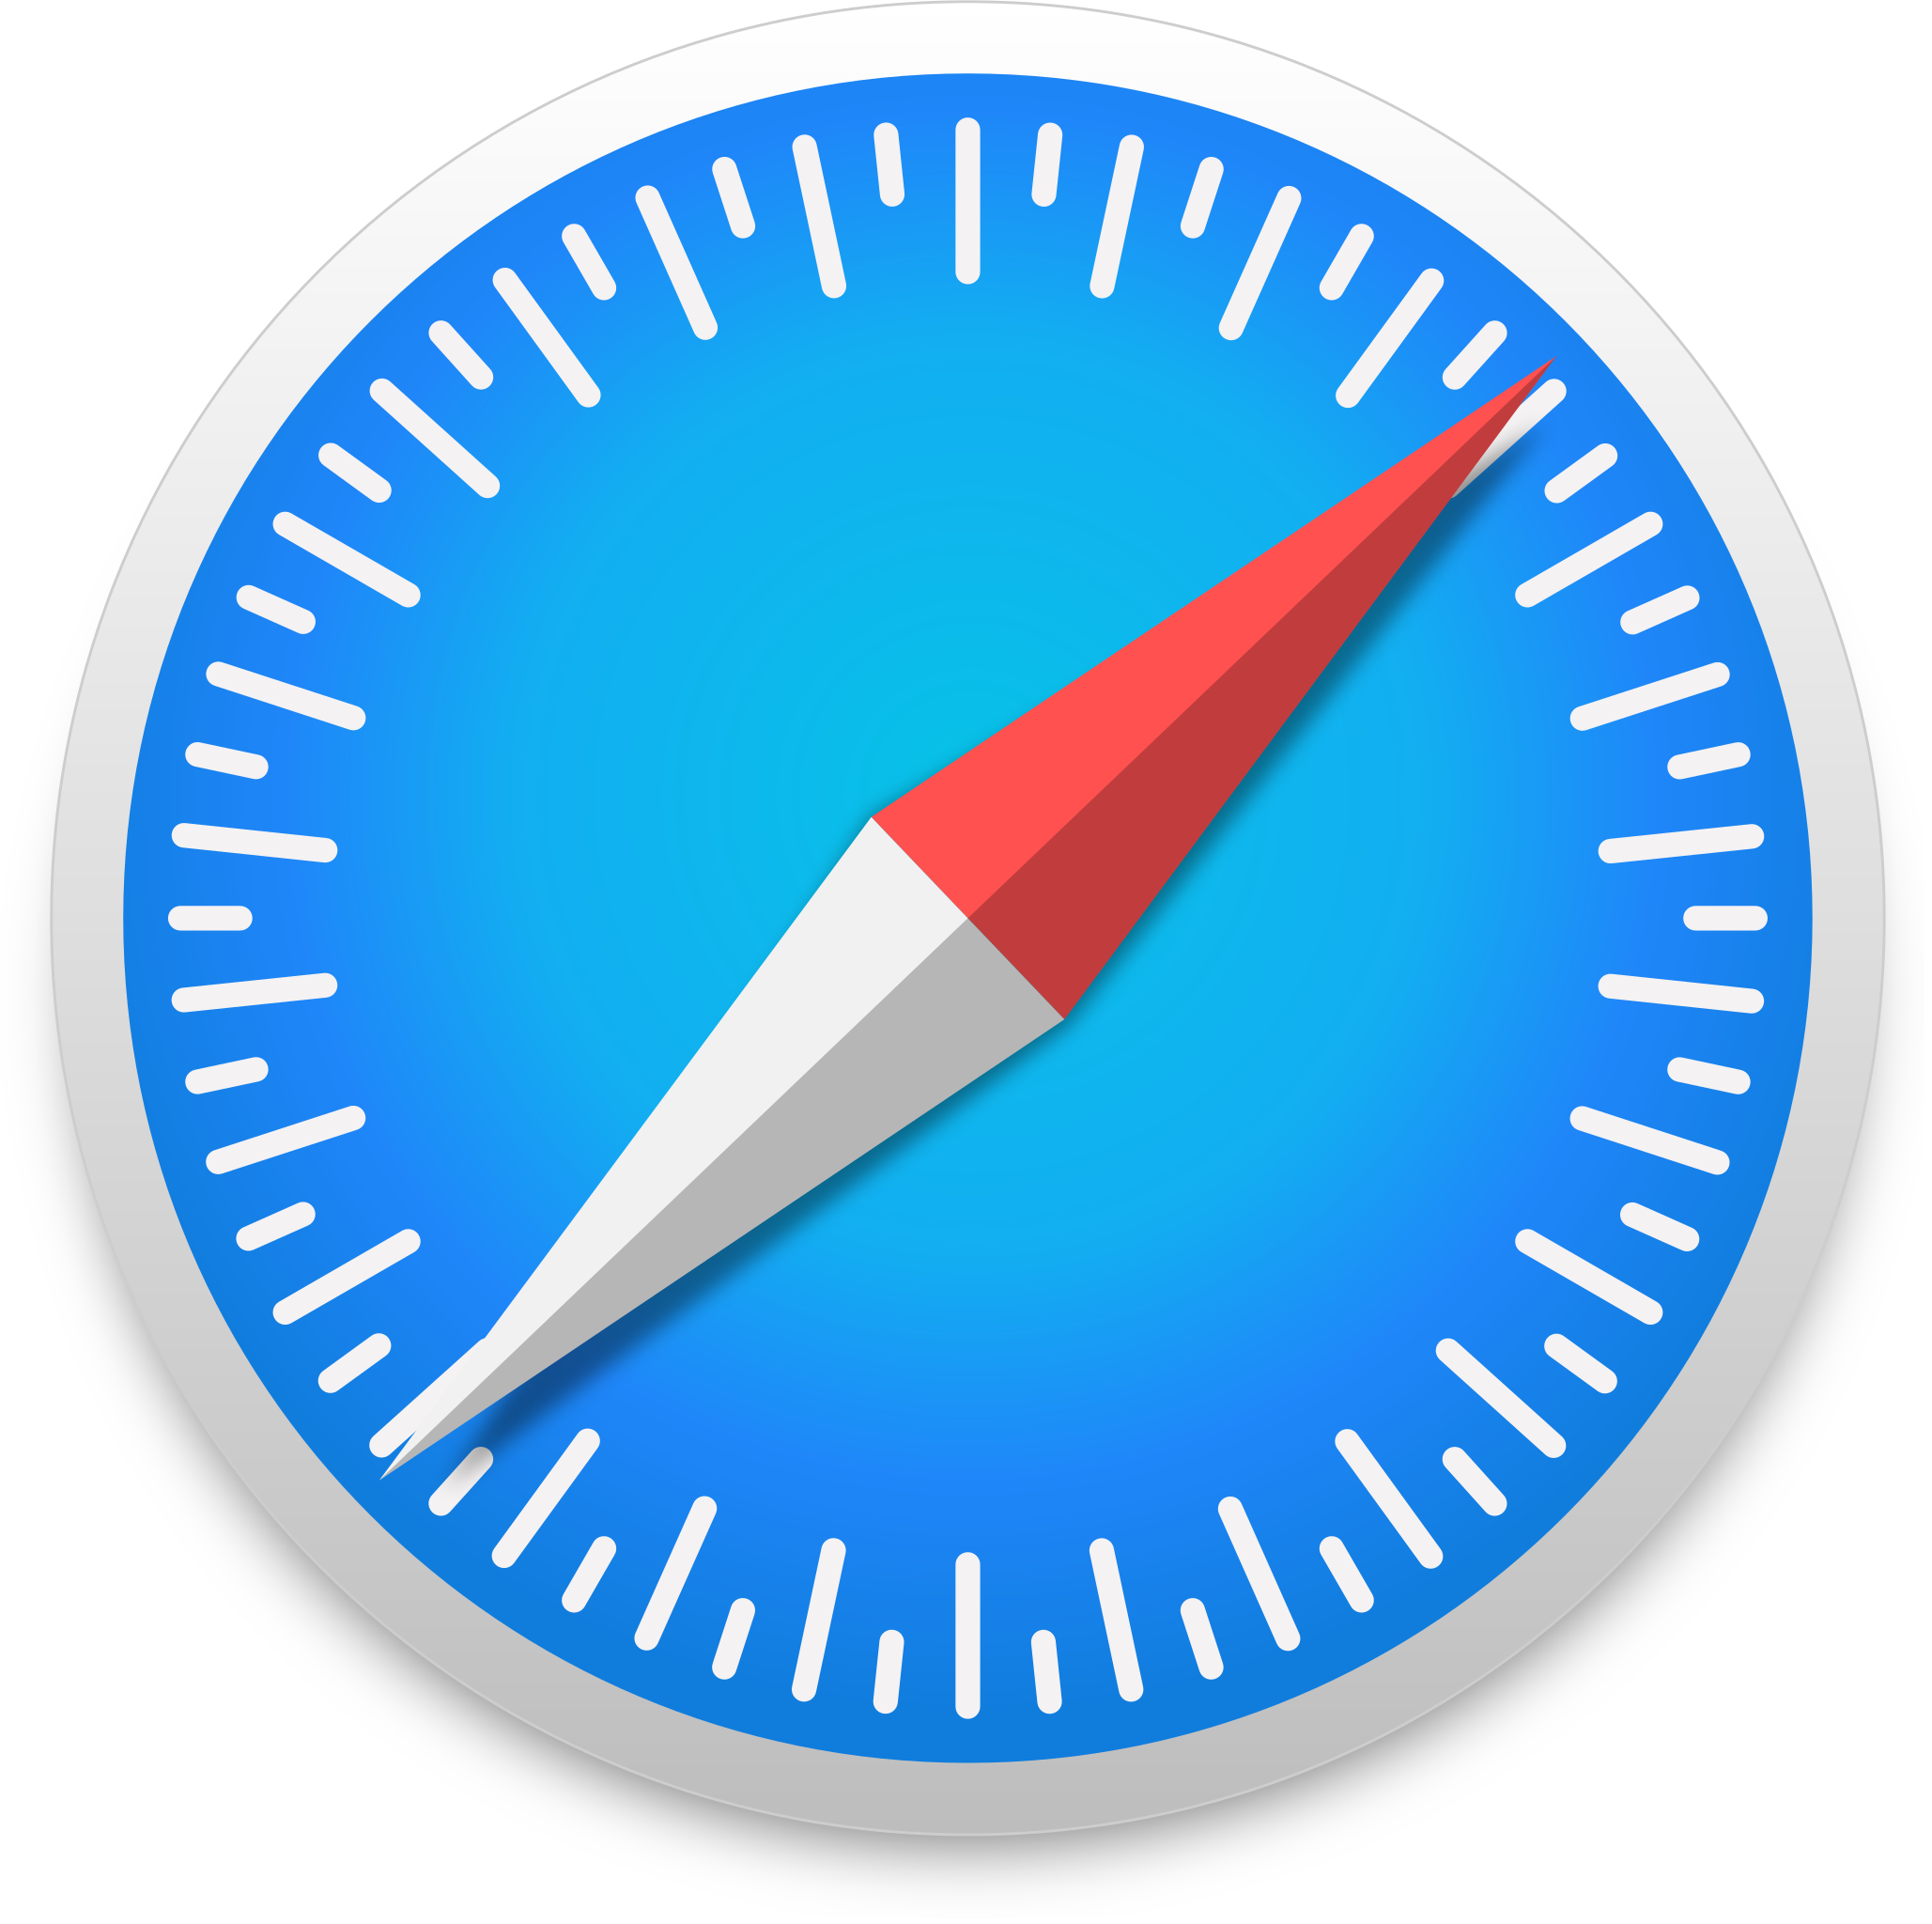 Fil:Safari browser logo.svg - Wikipedia, den frie encyklopædi